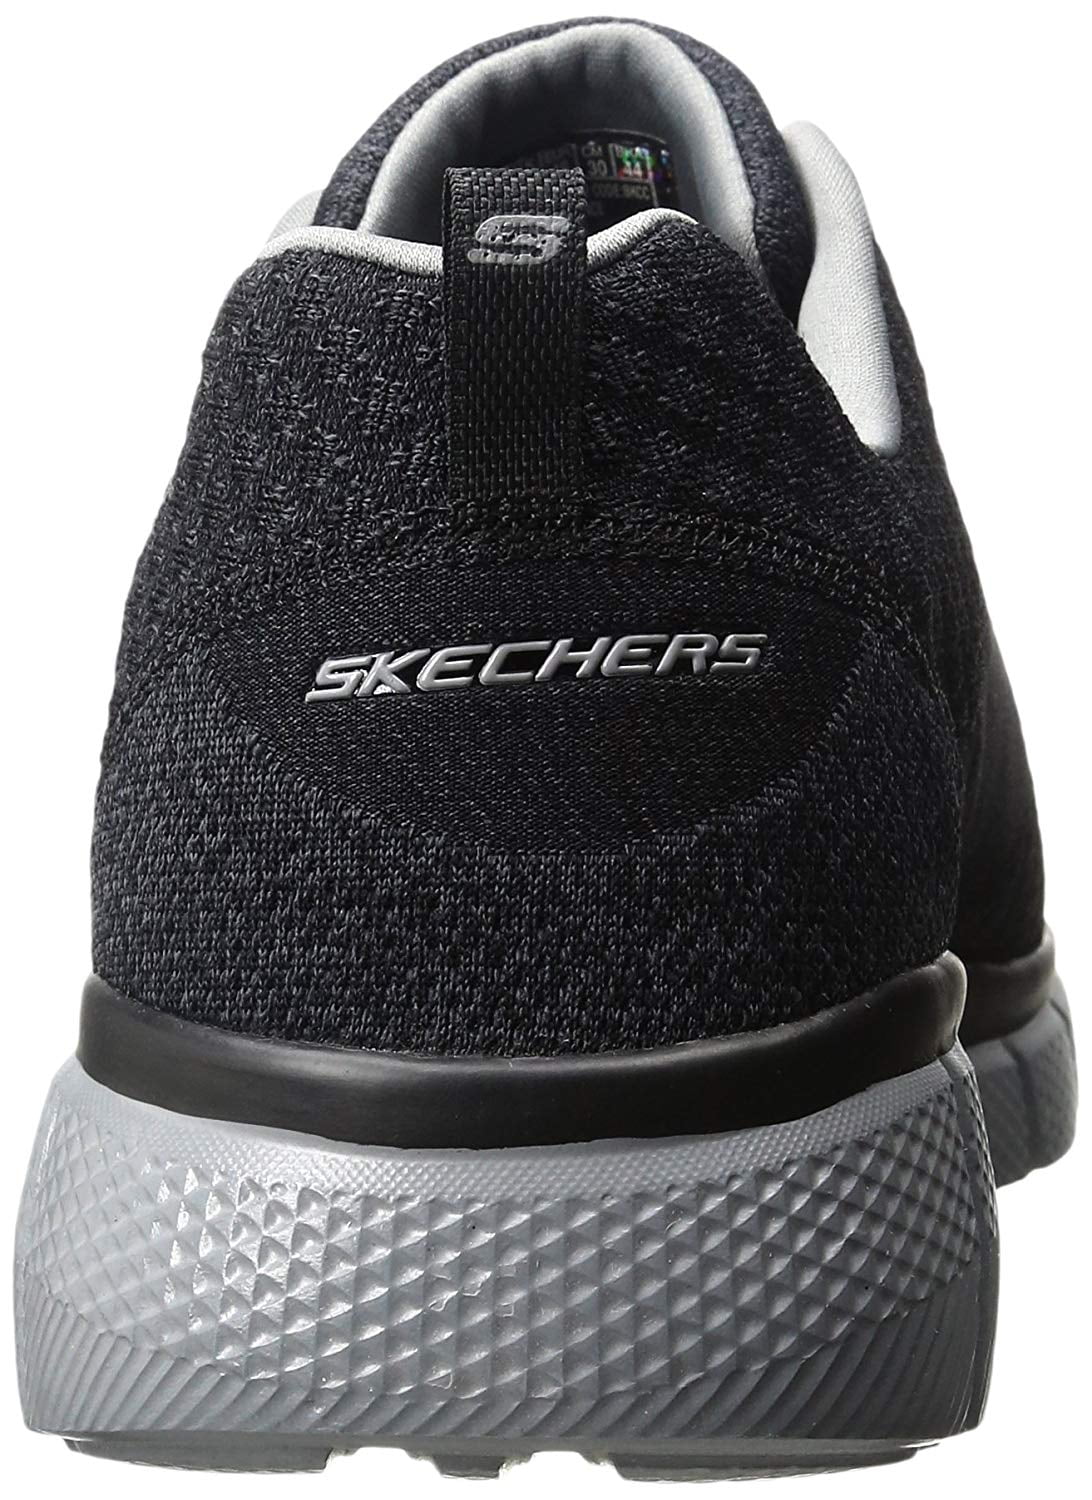 skechers sport men's equalizer 2.0 true balance sneaker